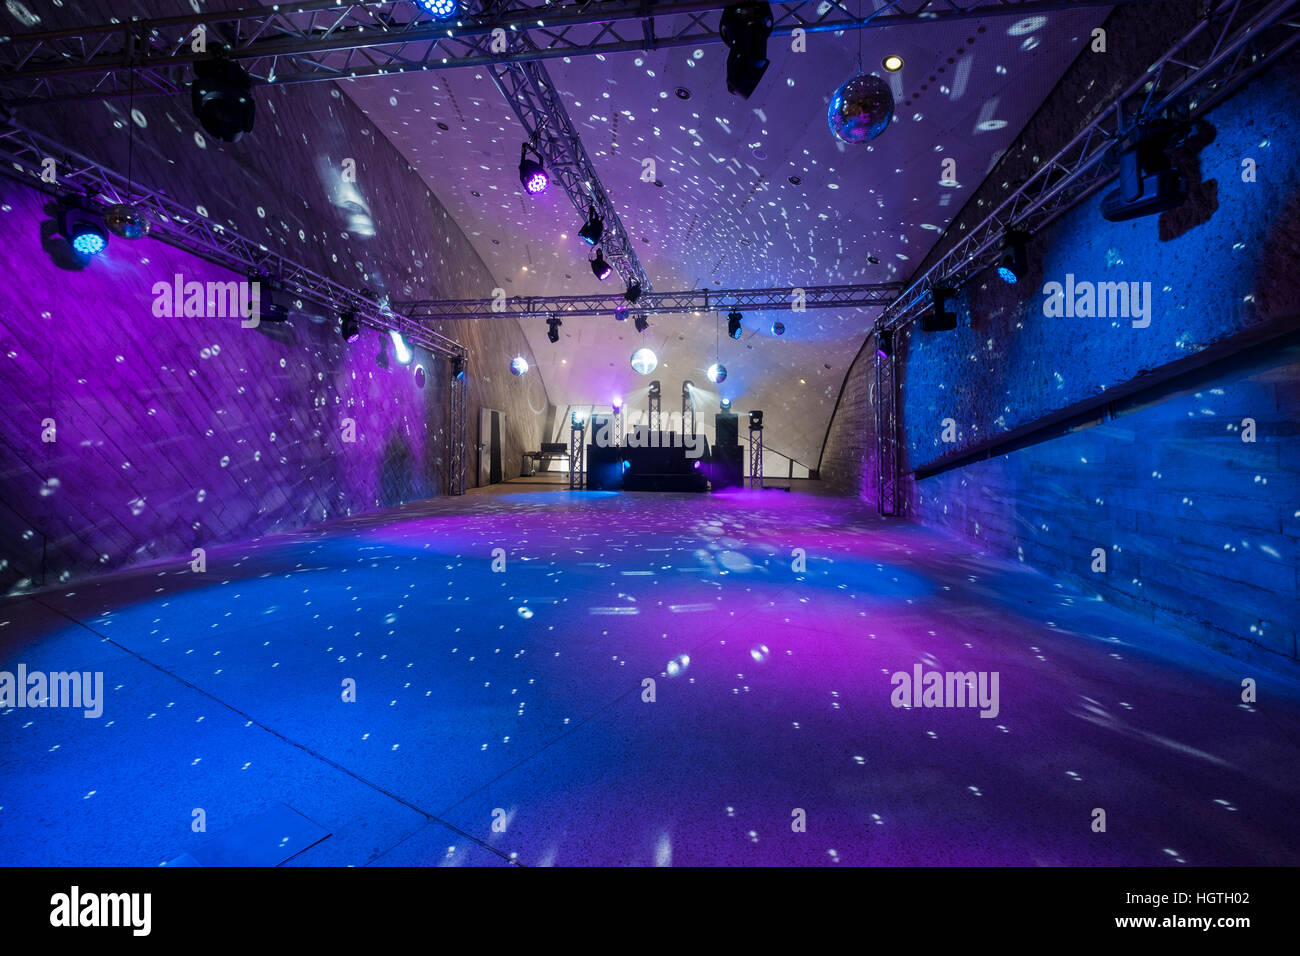 Empty disco dance floor with led lighting and mirror balls Stock Photo